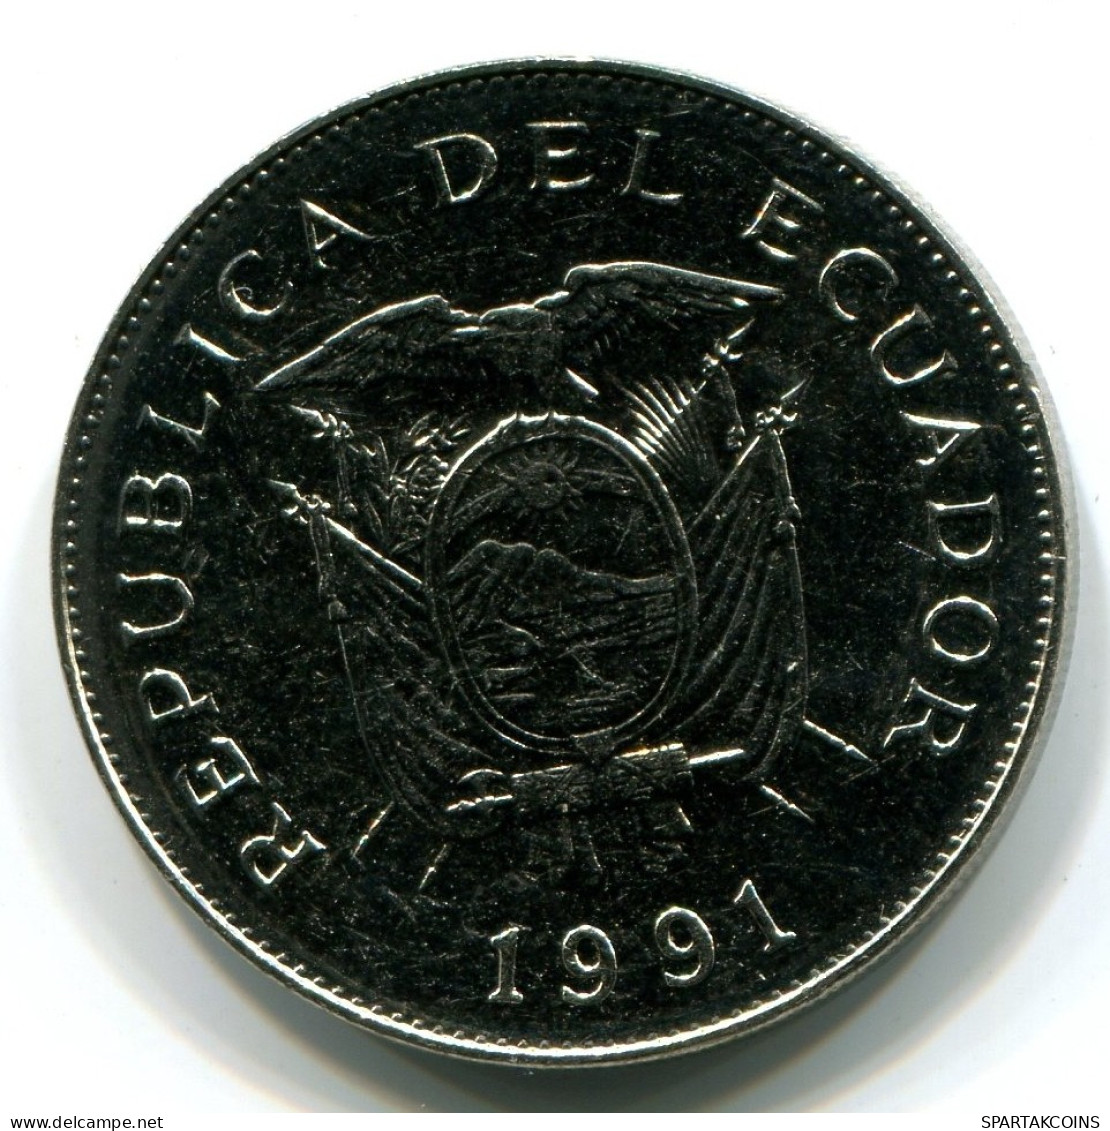 50 SUCRE 1991 ECUADOR UNC Coin #W11019.U.A - Ecuador